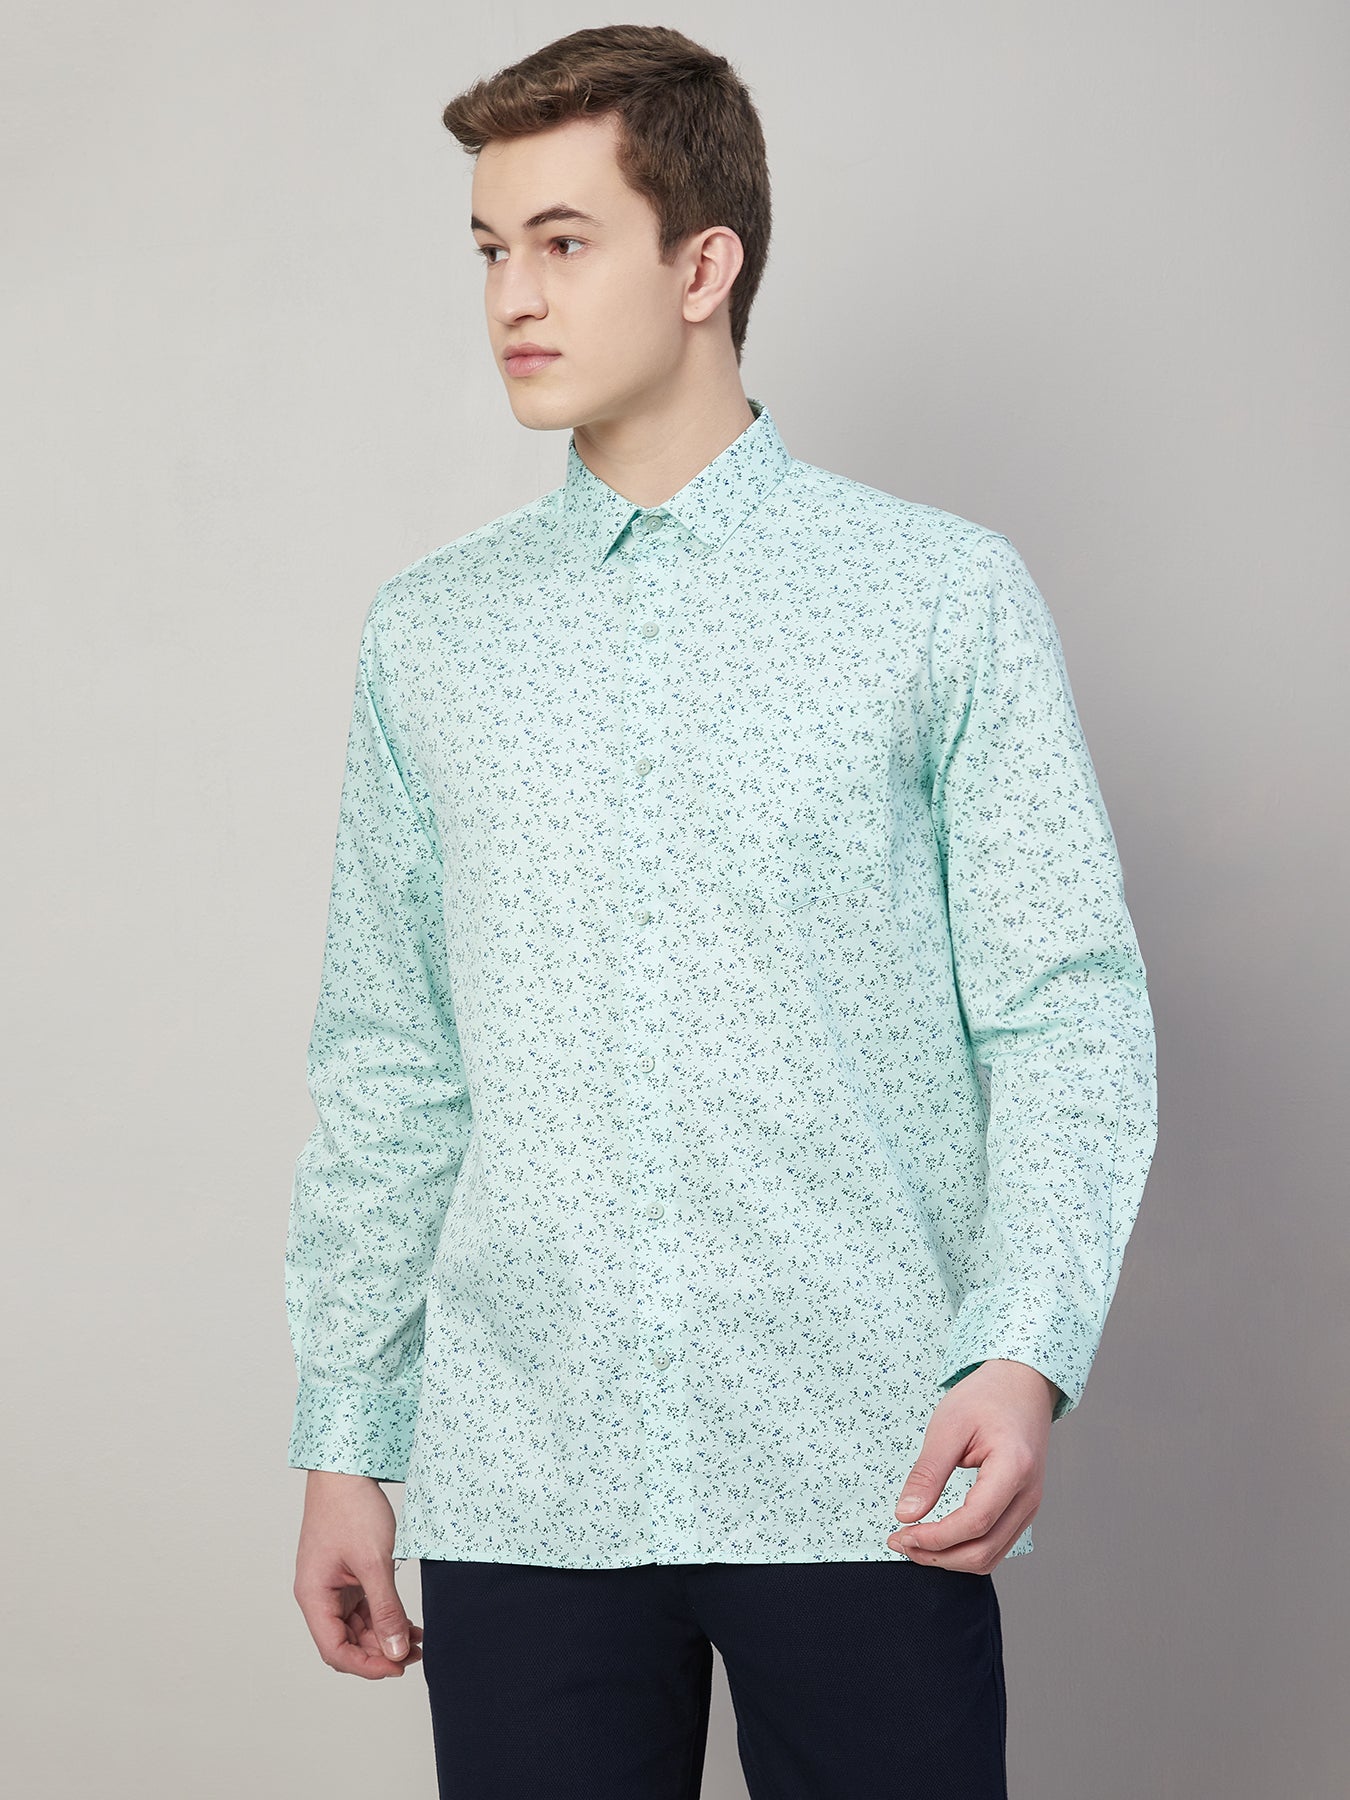 100% Cotton Sea Green Printed Regular Fit Full Sleeve Formal Shirt